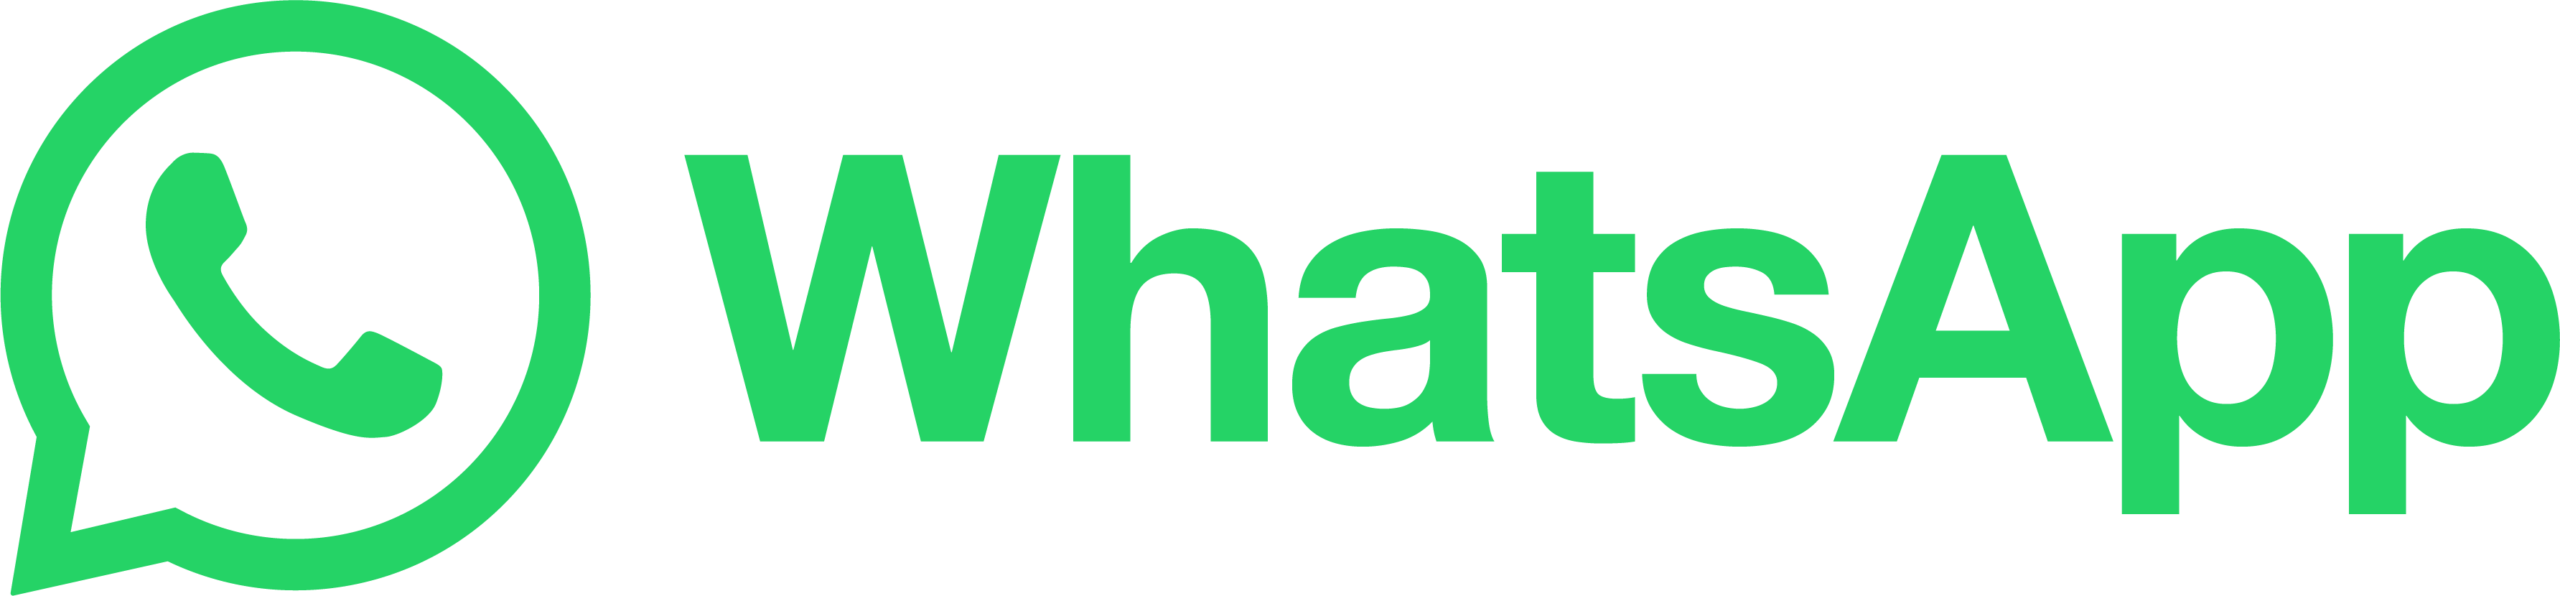 Whatsapp Logo 2 Stegplattenversand.nl - Benelux®